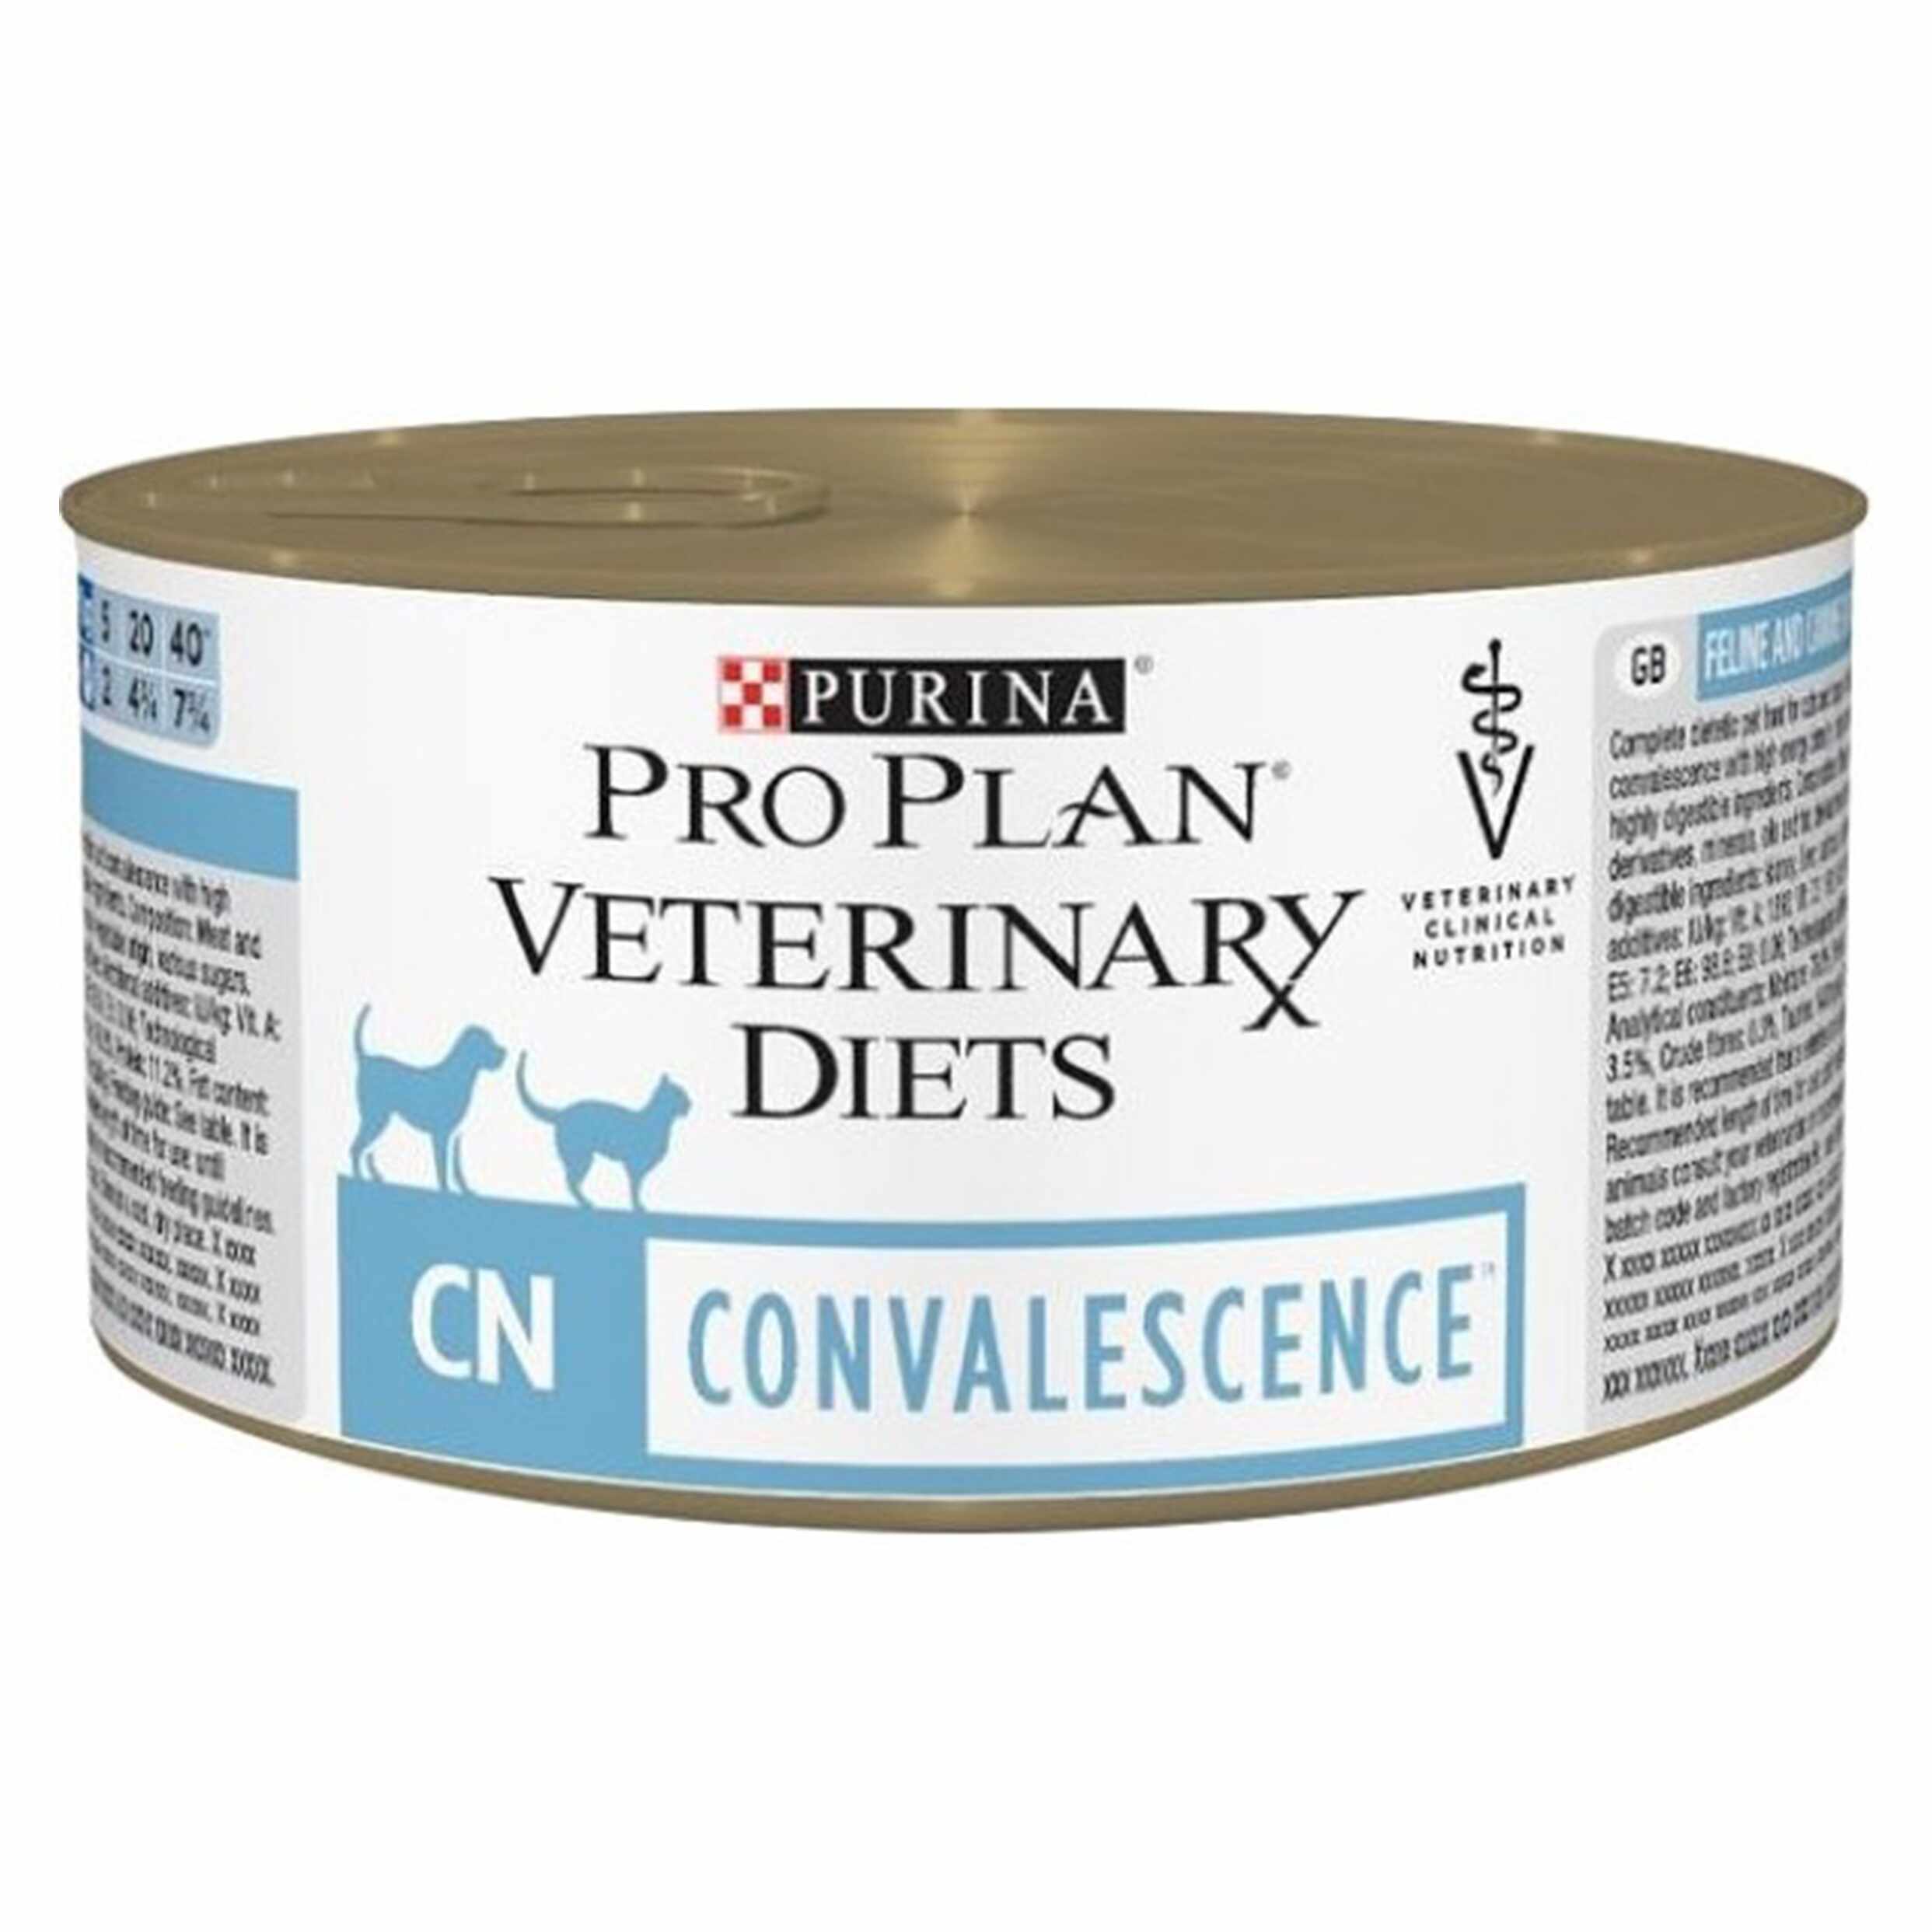 Purina Veterinary Diets CN, Convalescence Diet, 195 g